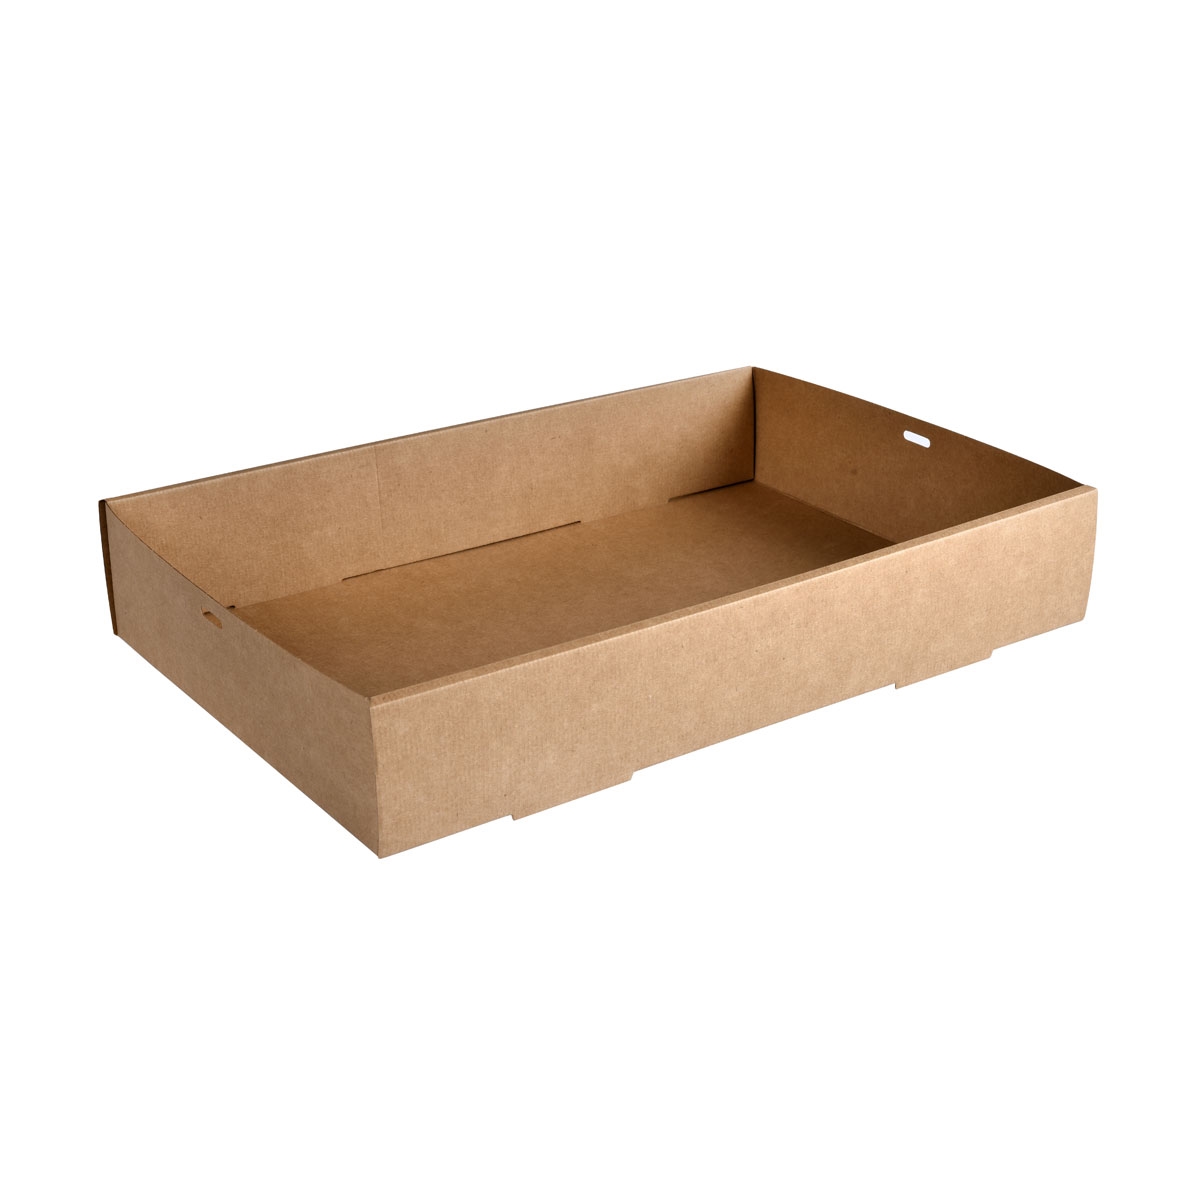 Catering-Tray Cardboard / PLA braun, Large braun